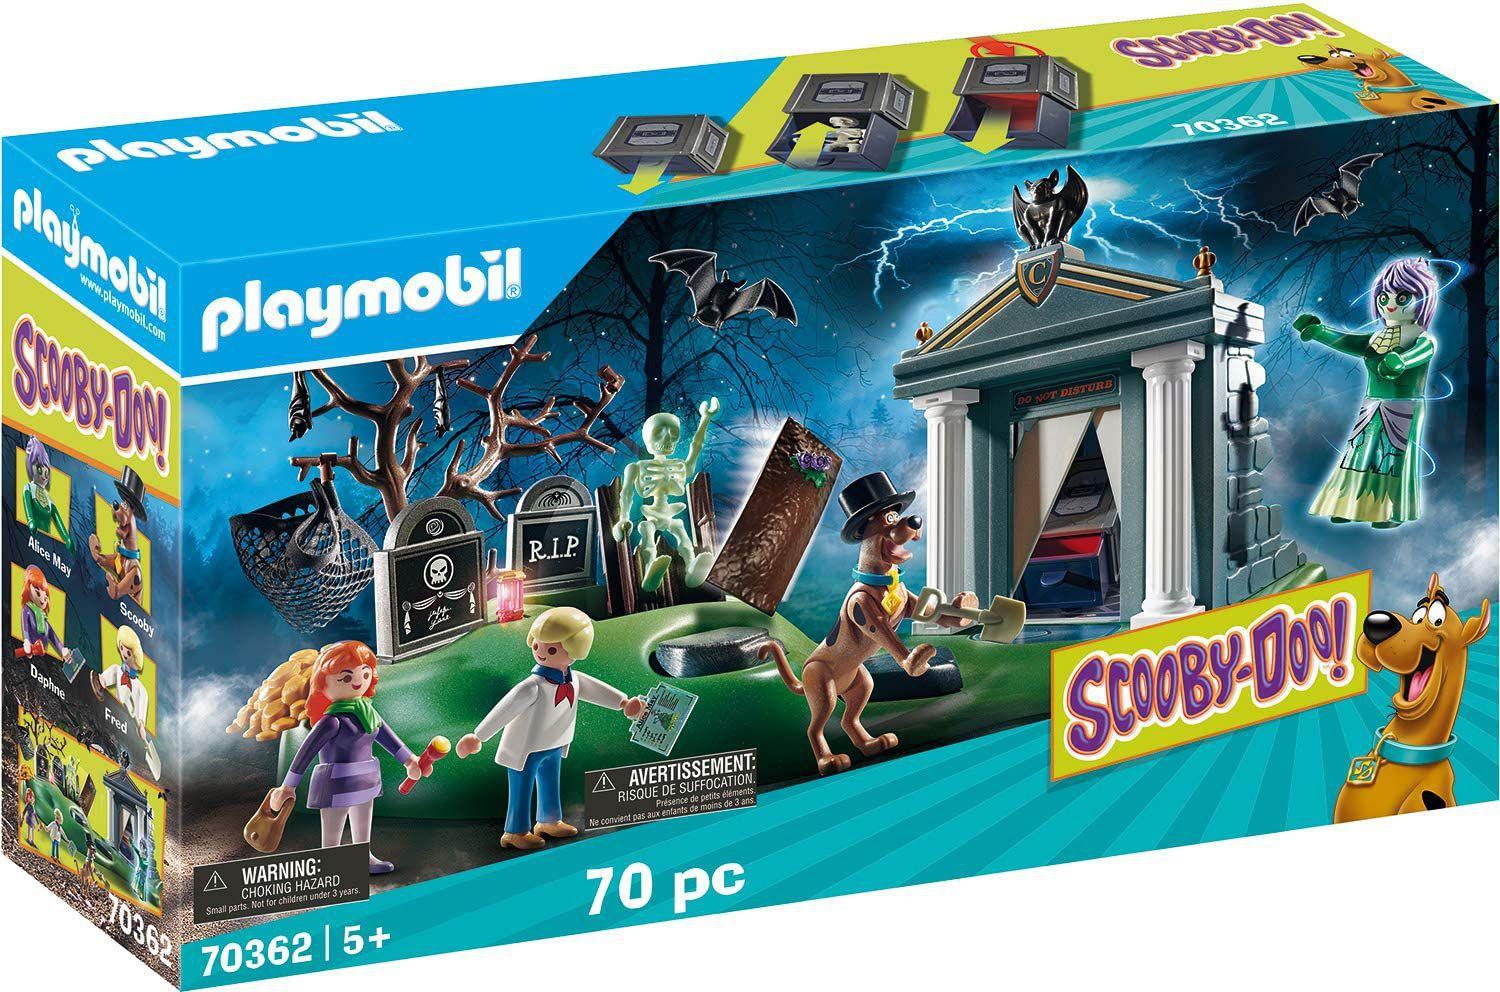 Playmobil - Scooby Doo Aventura no Cemiterio - 2536 SUNNY - Grupo Solmaior